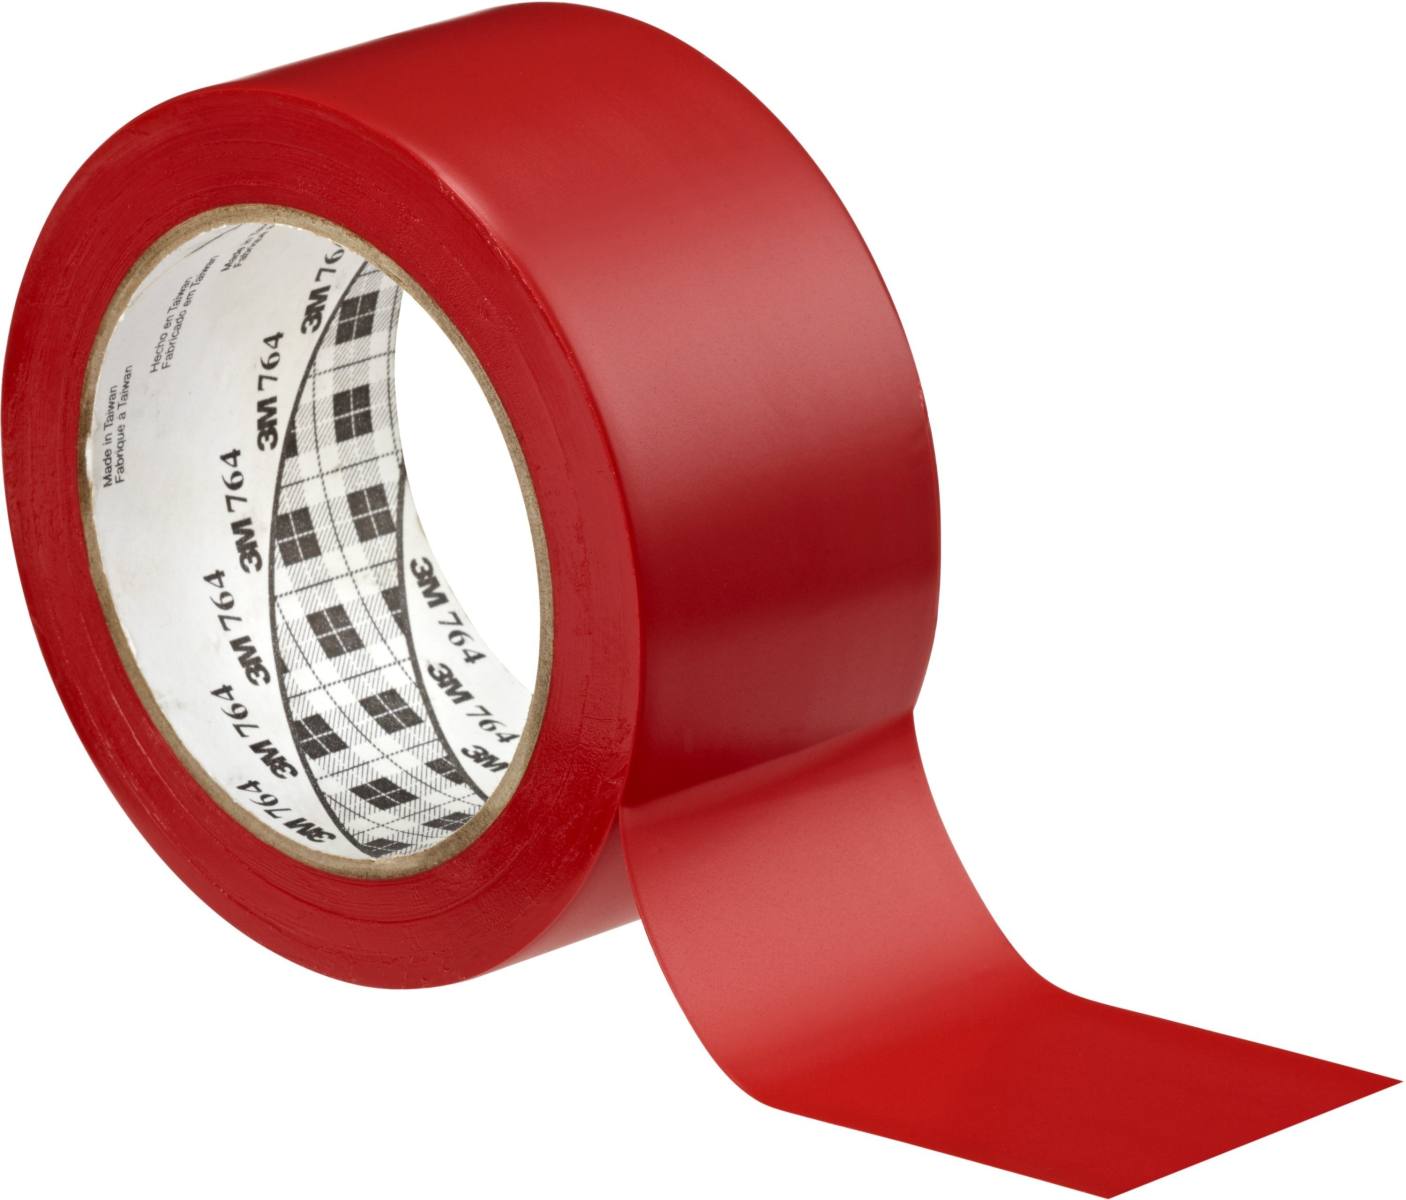 3M ruban adhésif PVC tout usage 764, rouge, 50 mm x 33 m, emballage individuel pratique